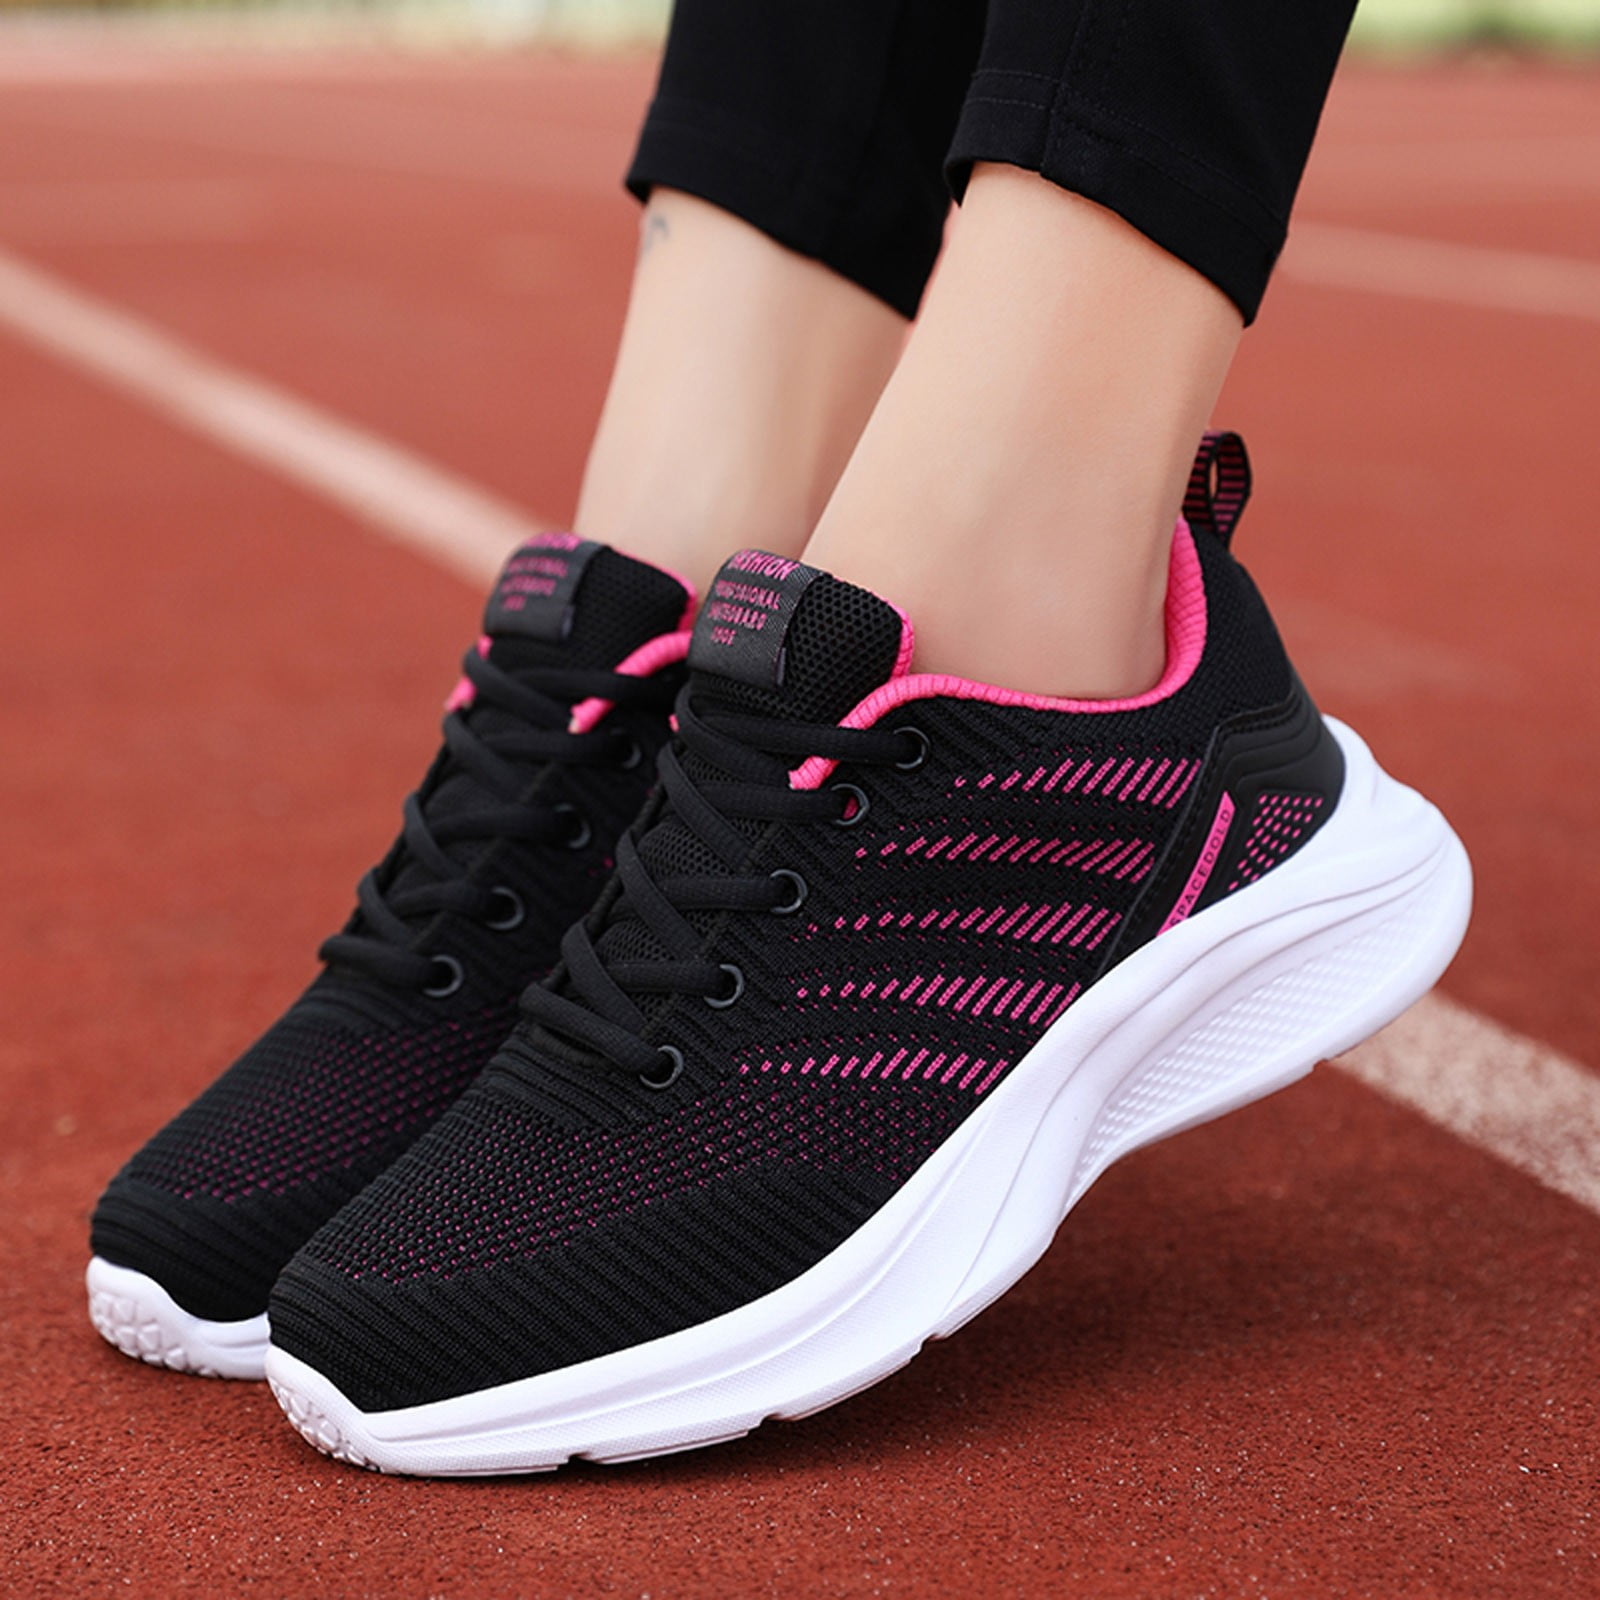 Buy SECRET DESIRE Casual Sports Sandals Women Platform Sneaker Sandals For  Running Hiker Pants 40 at Amazon.in